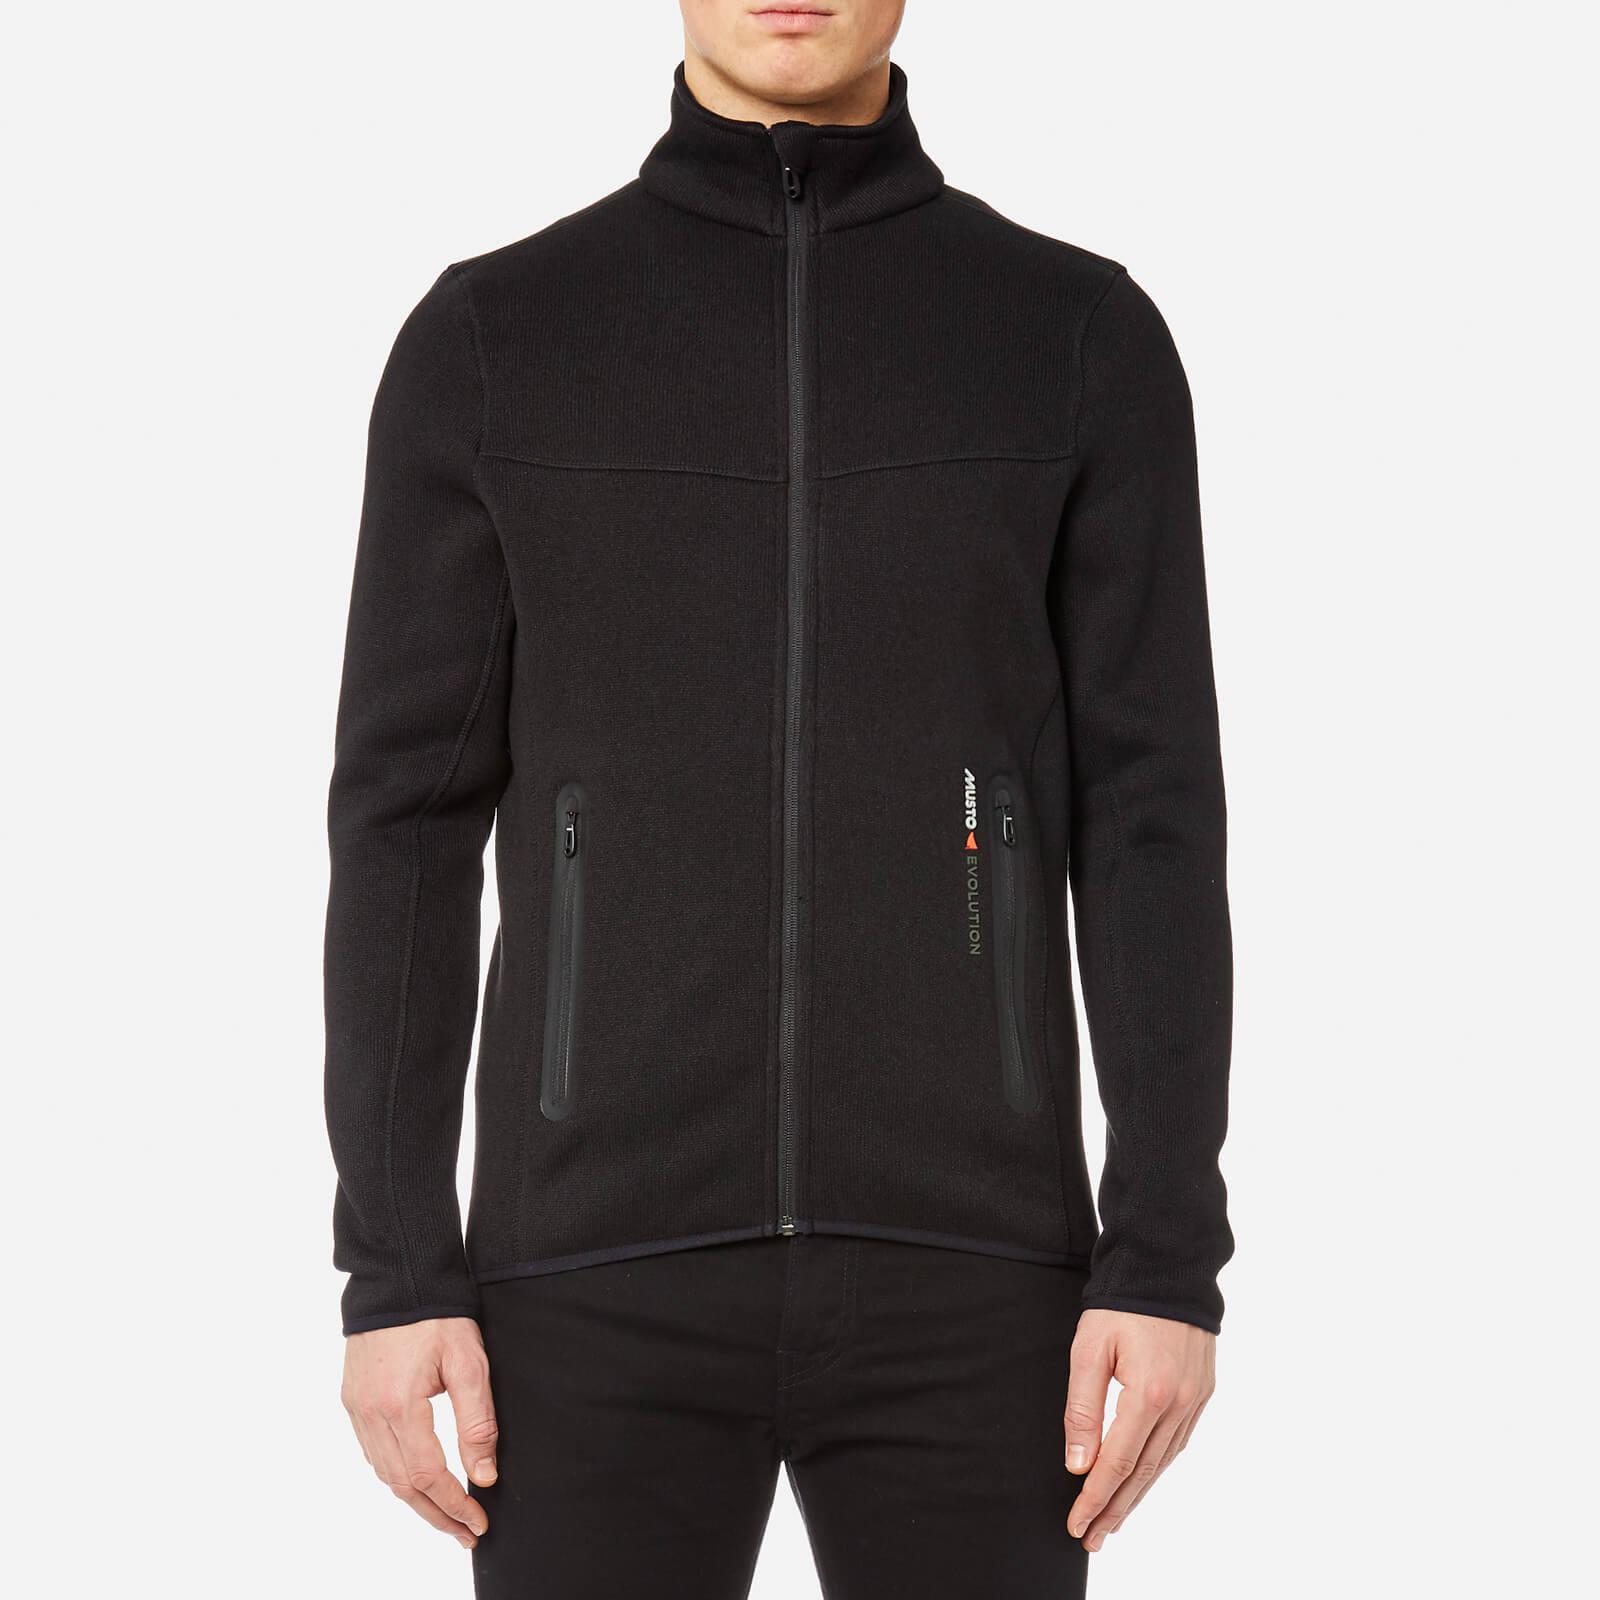 Musto Tidal Polartec® Fleece in Black for Men - Lyst